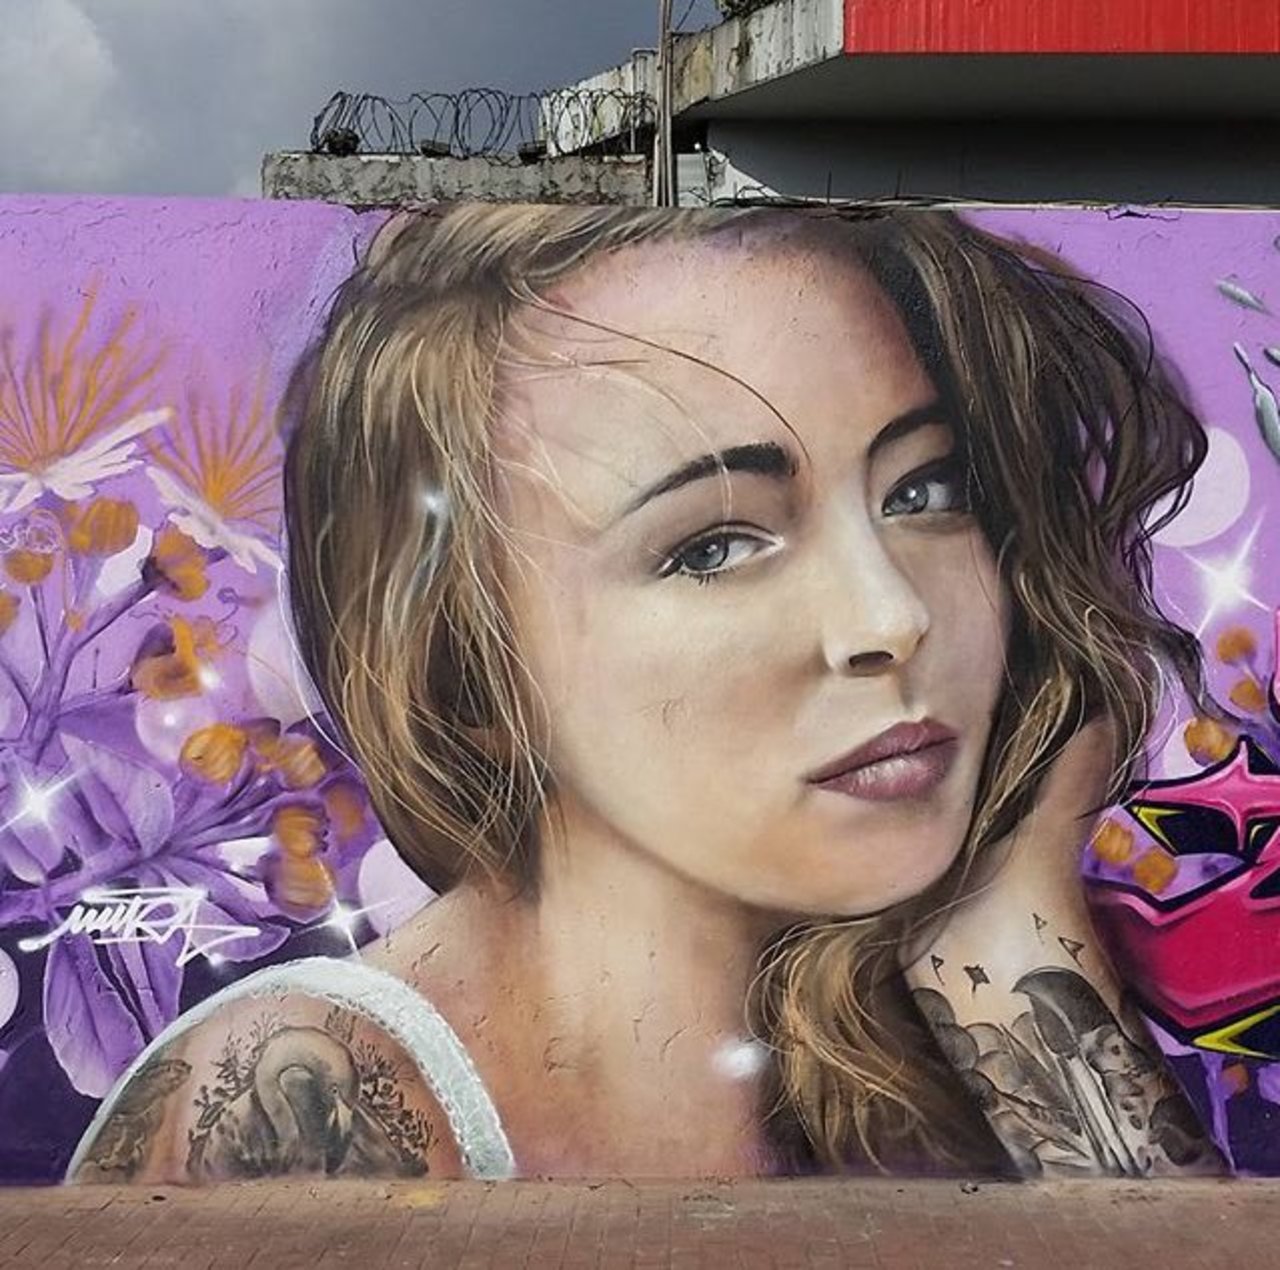 New Street Art by Mantarea 

#art #graffiti #mural #streetart https://t.co/lVzBoxkBdc